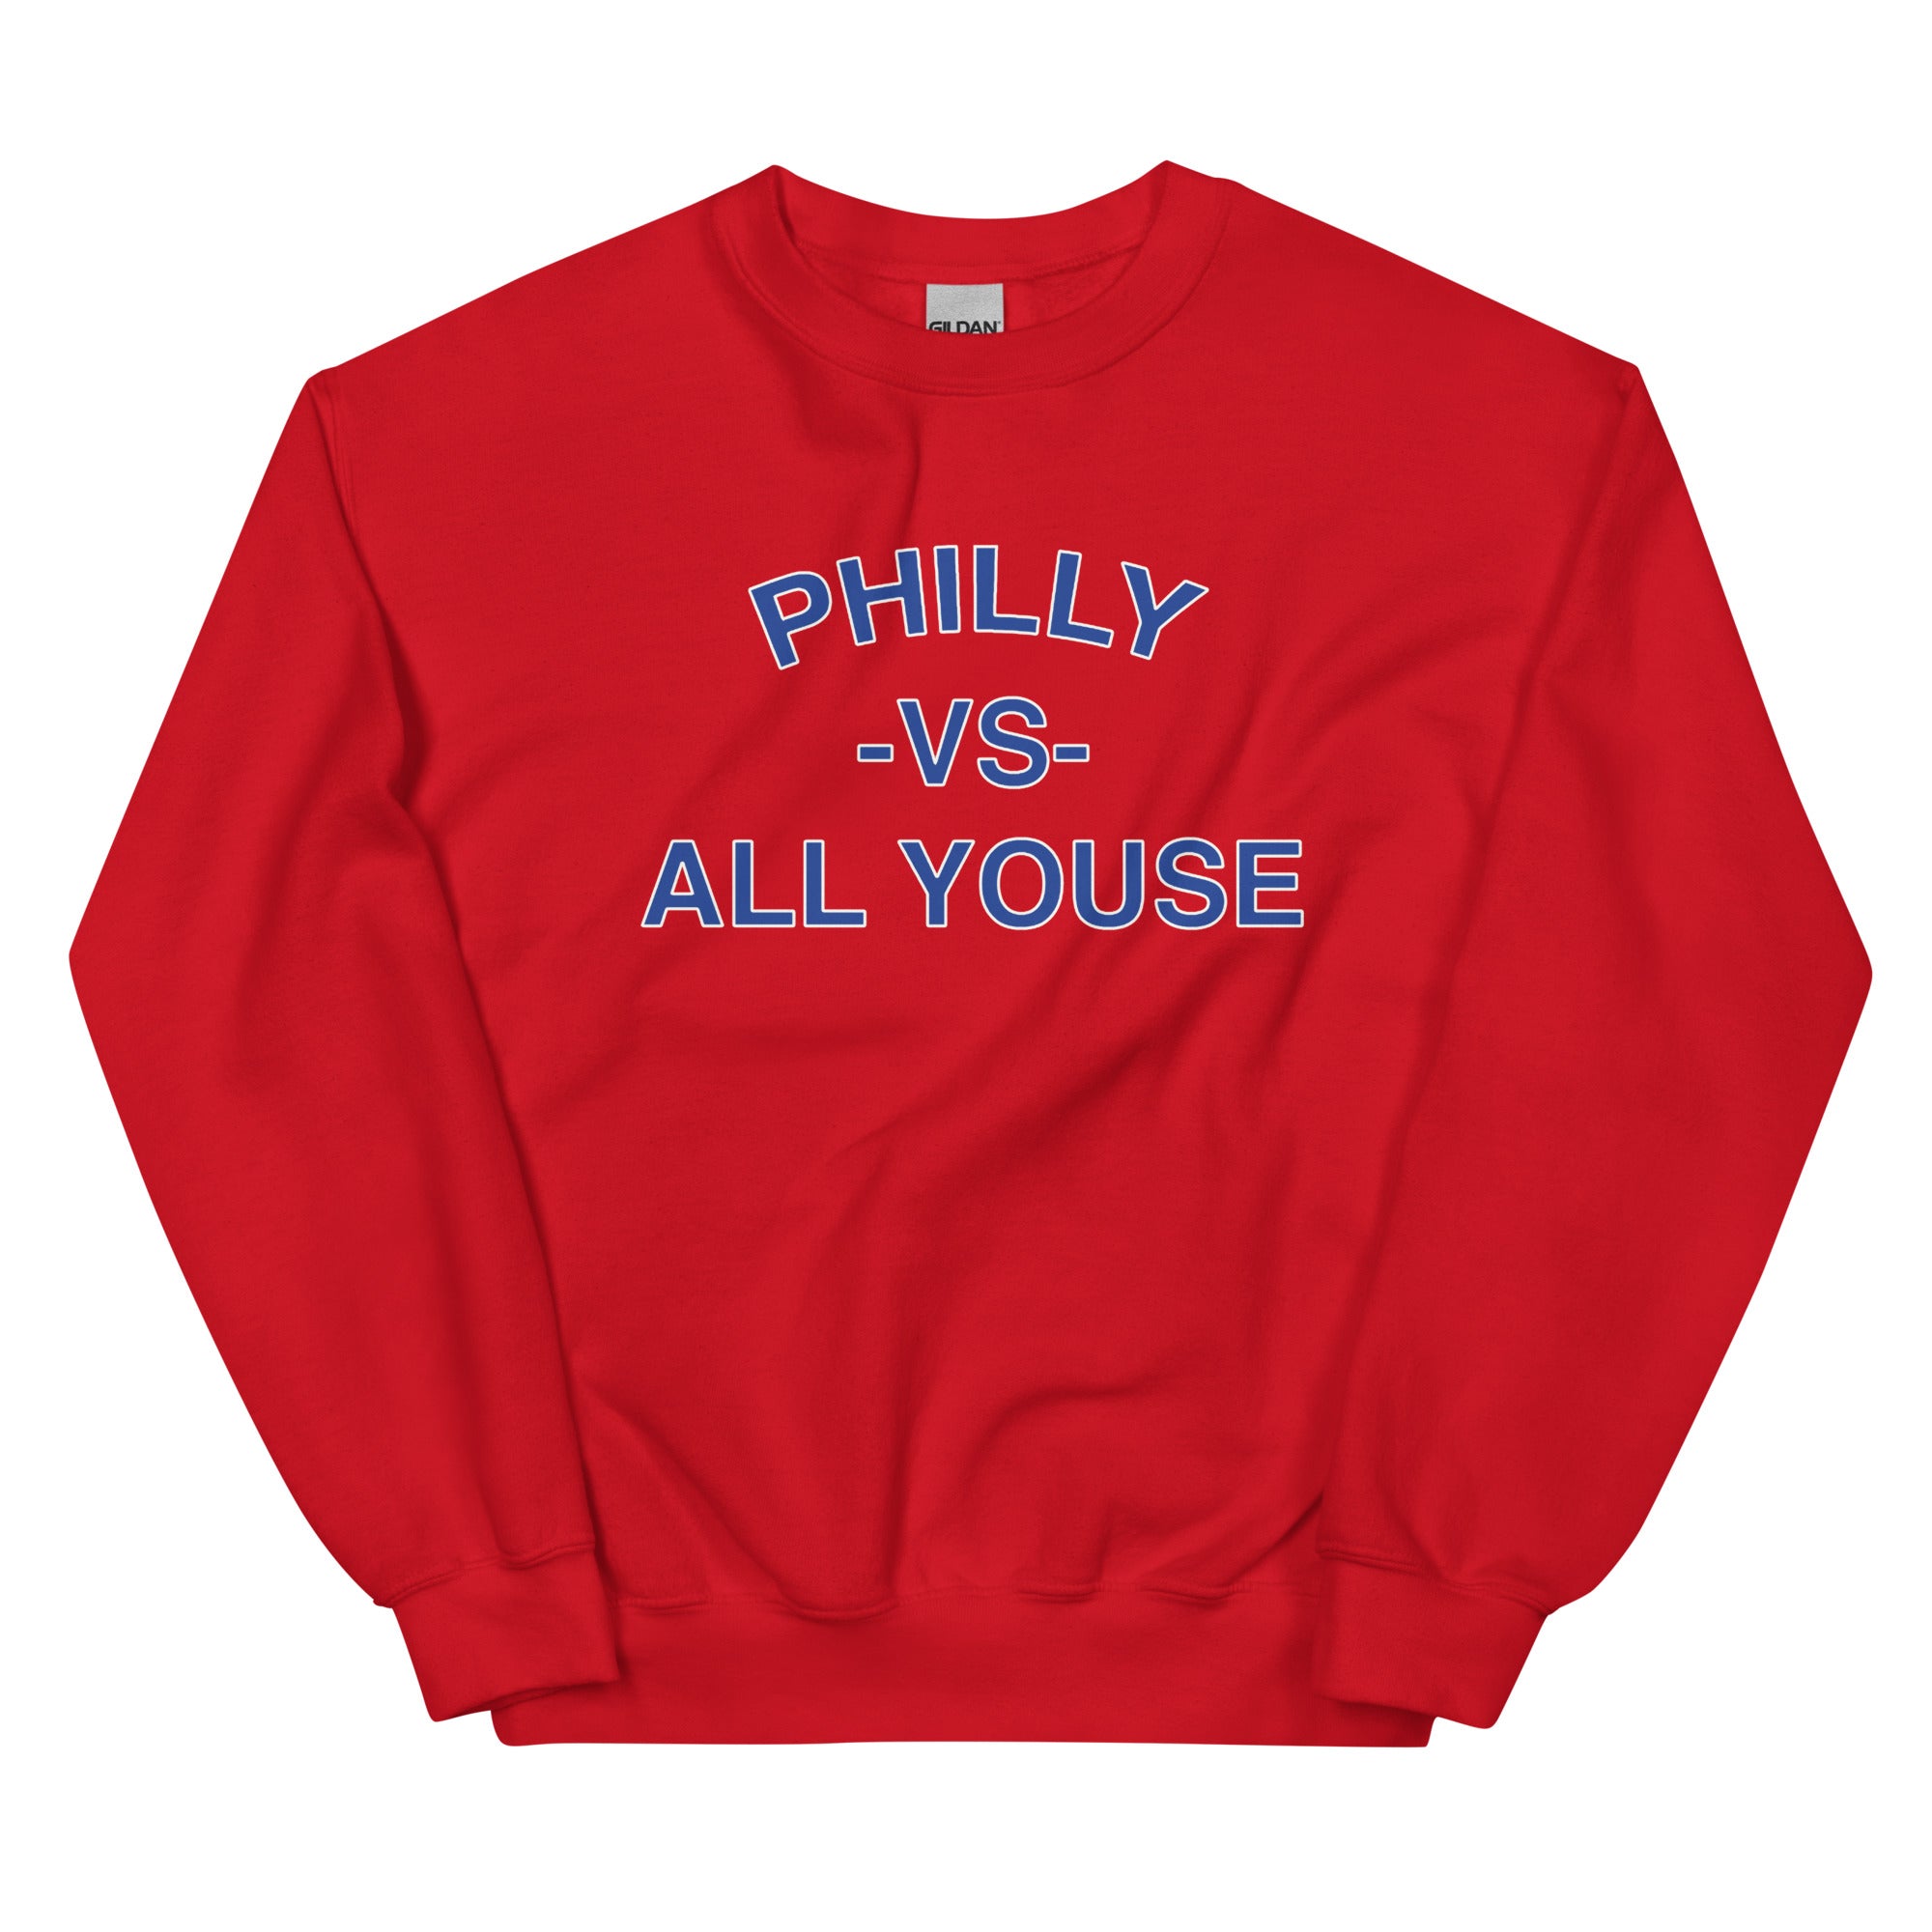 Philadelphia vs everybody philly vs all youse red sweatshirt Phillygoat